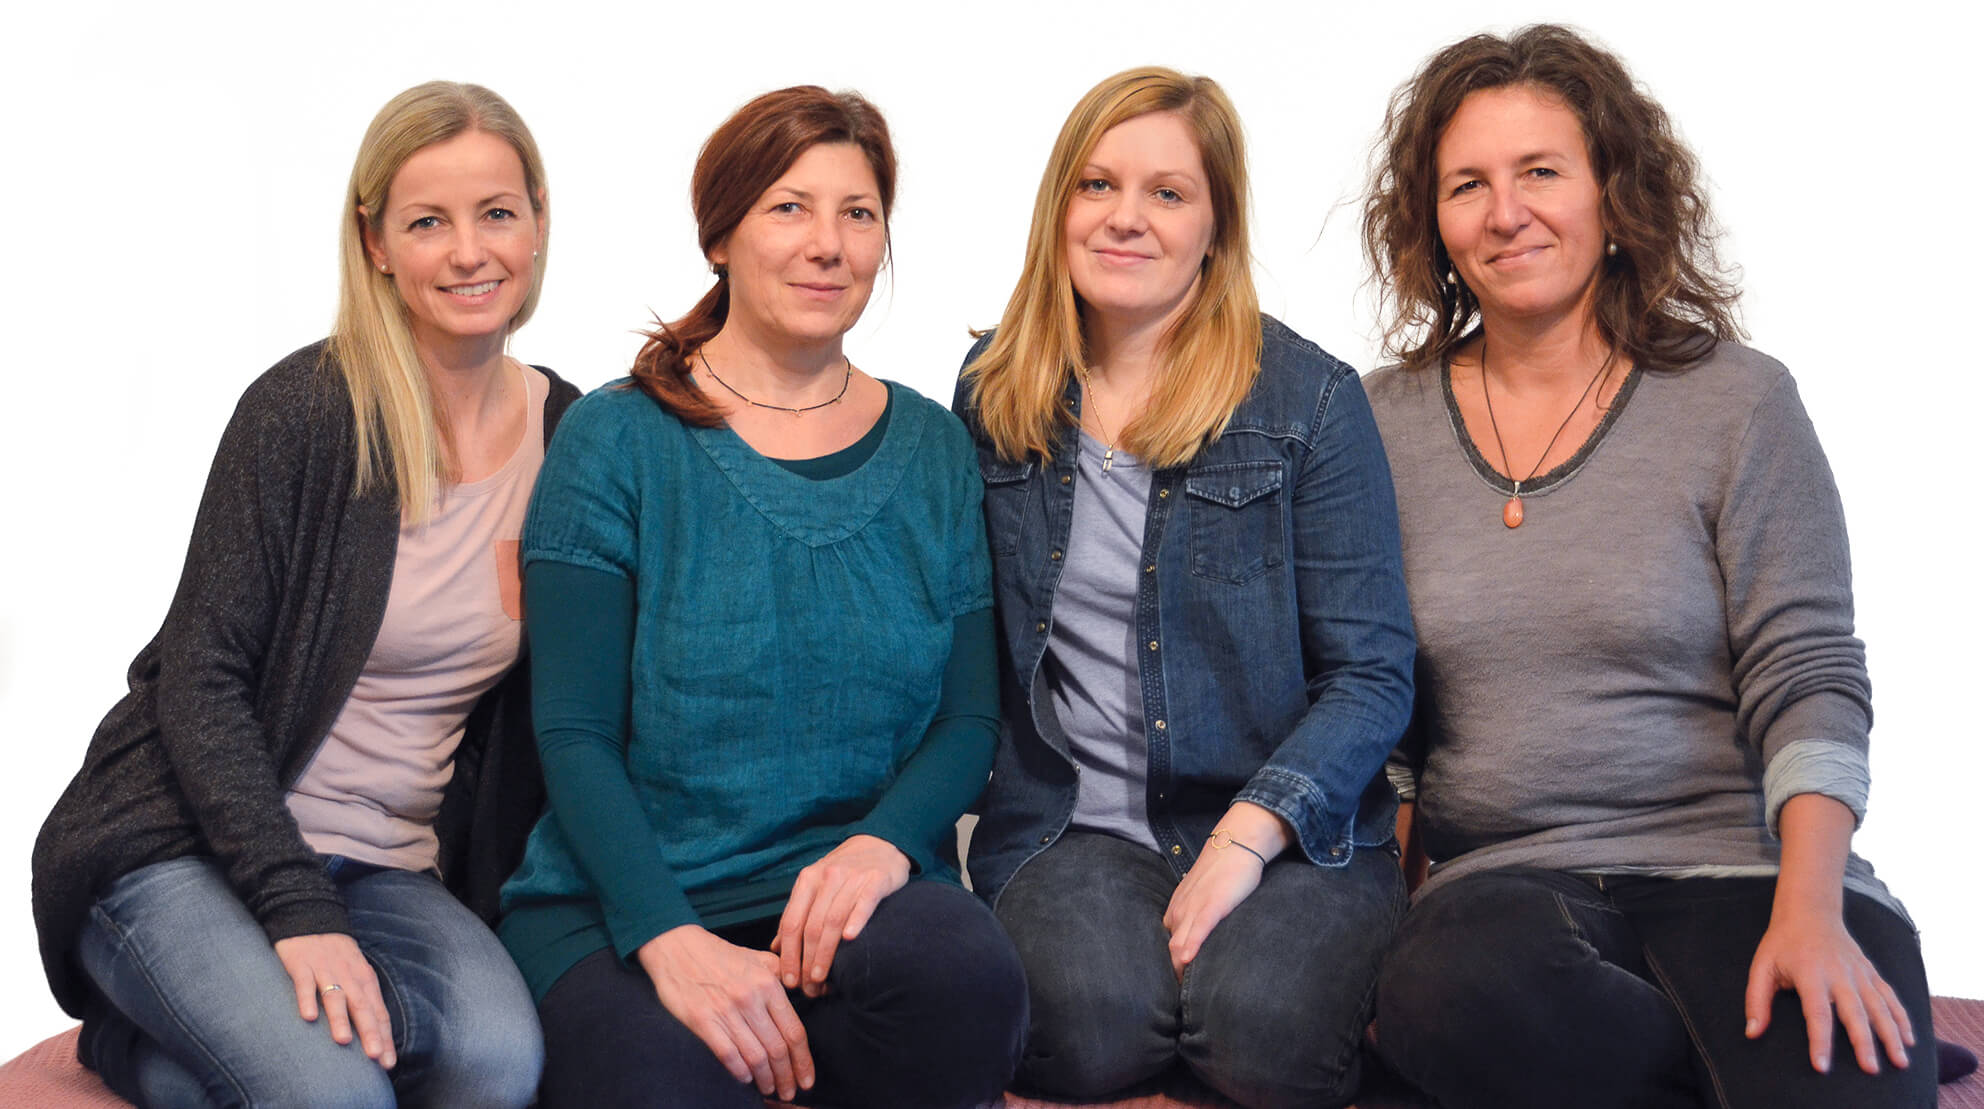 Das Team der Sillpraxis - Karin Wint, Birgit Ritter, Bianca Steiner, Renate Magerle